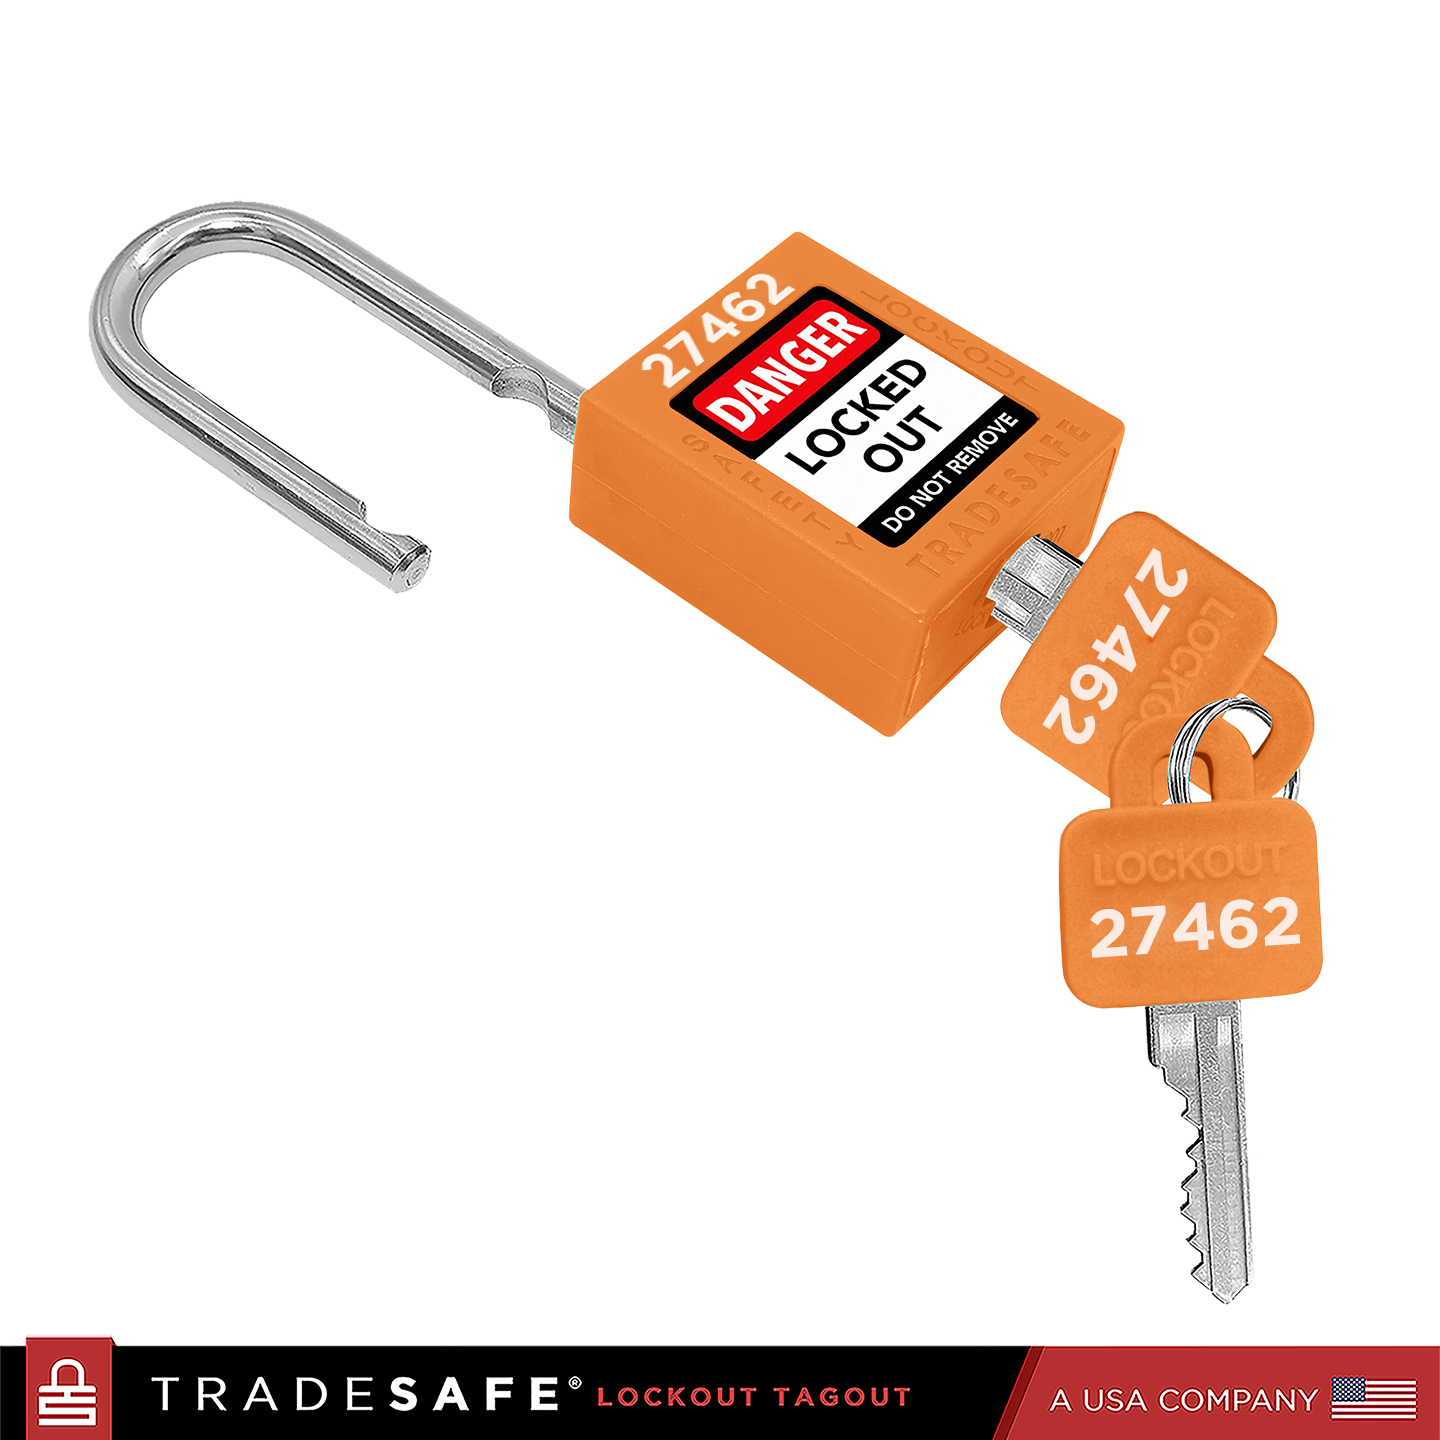 orange lockout tagout lock with 2 keys, 1 key inserted